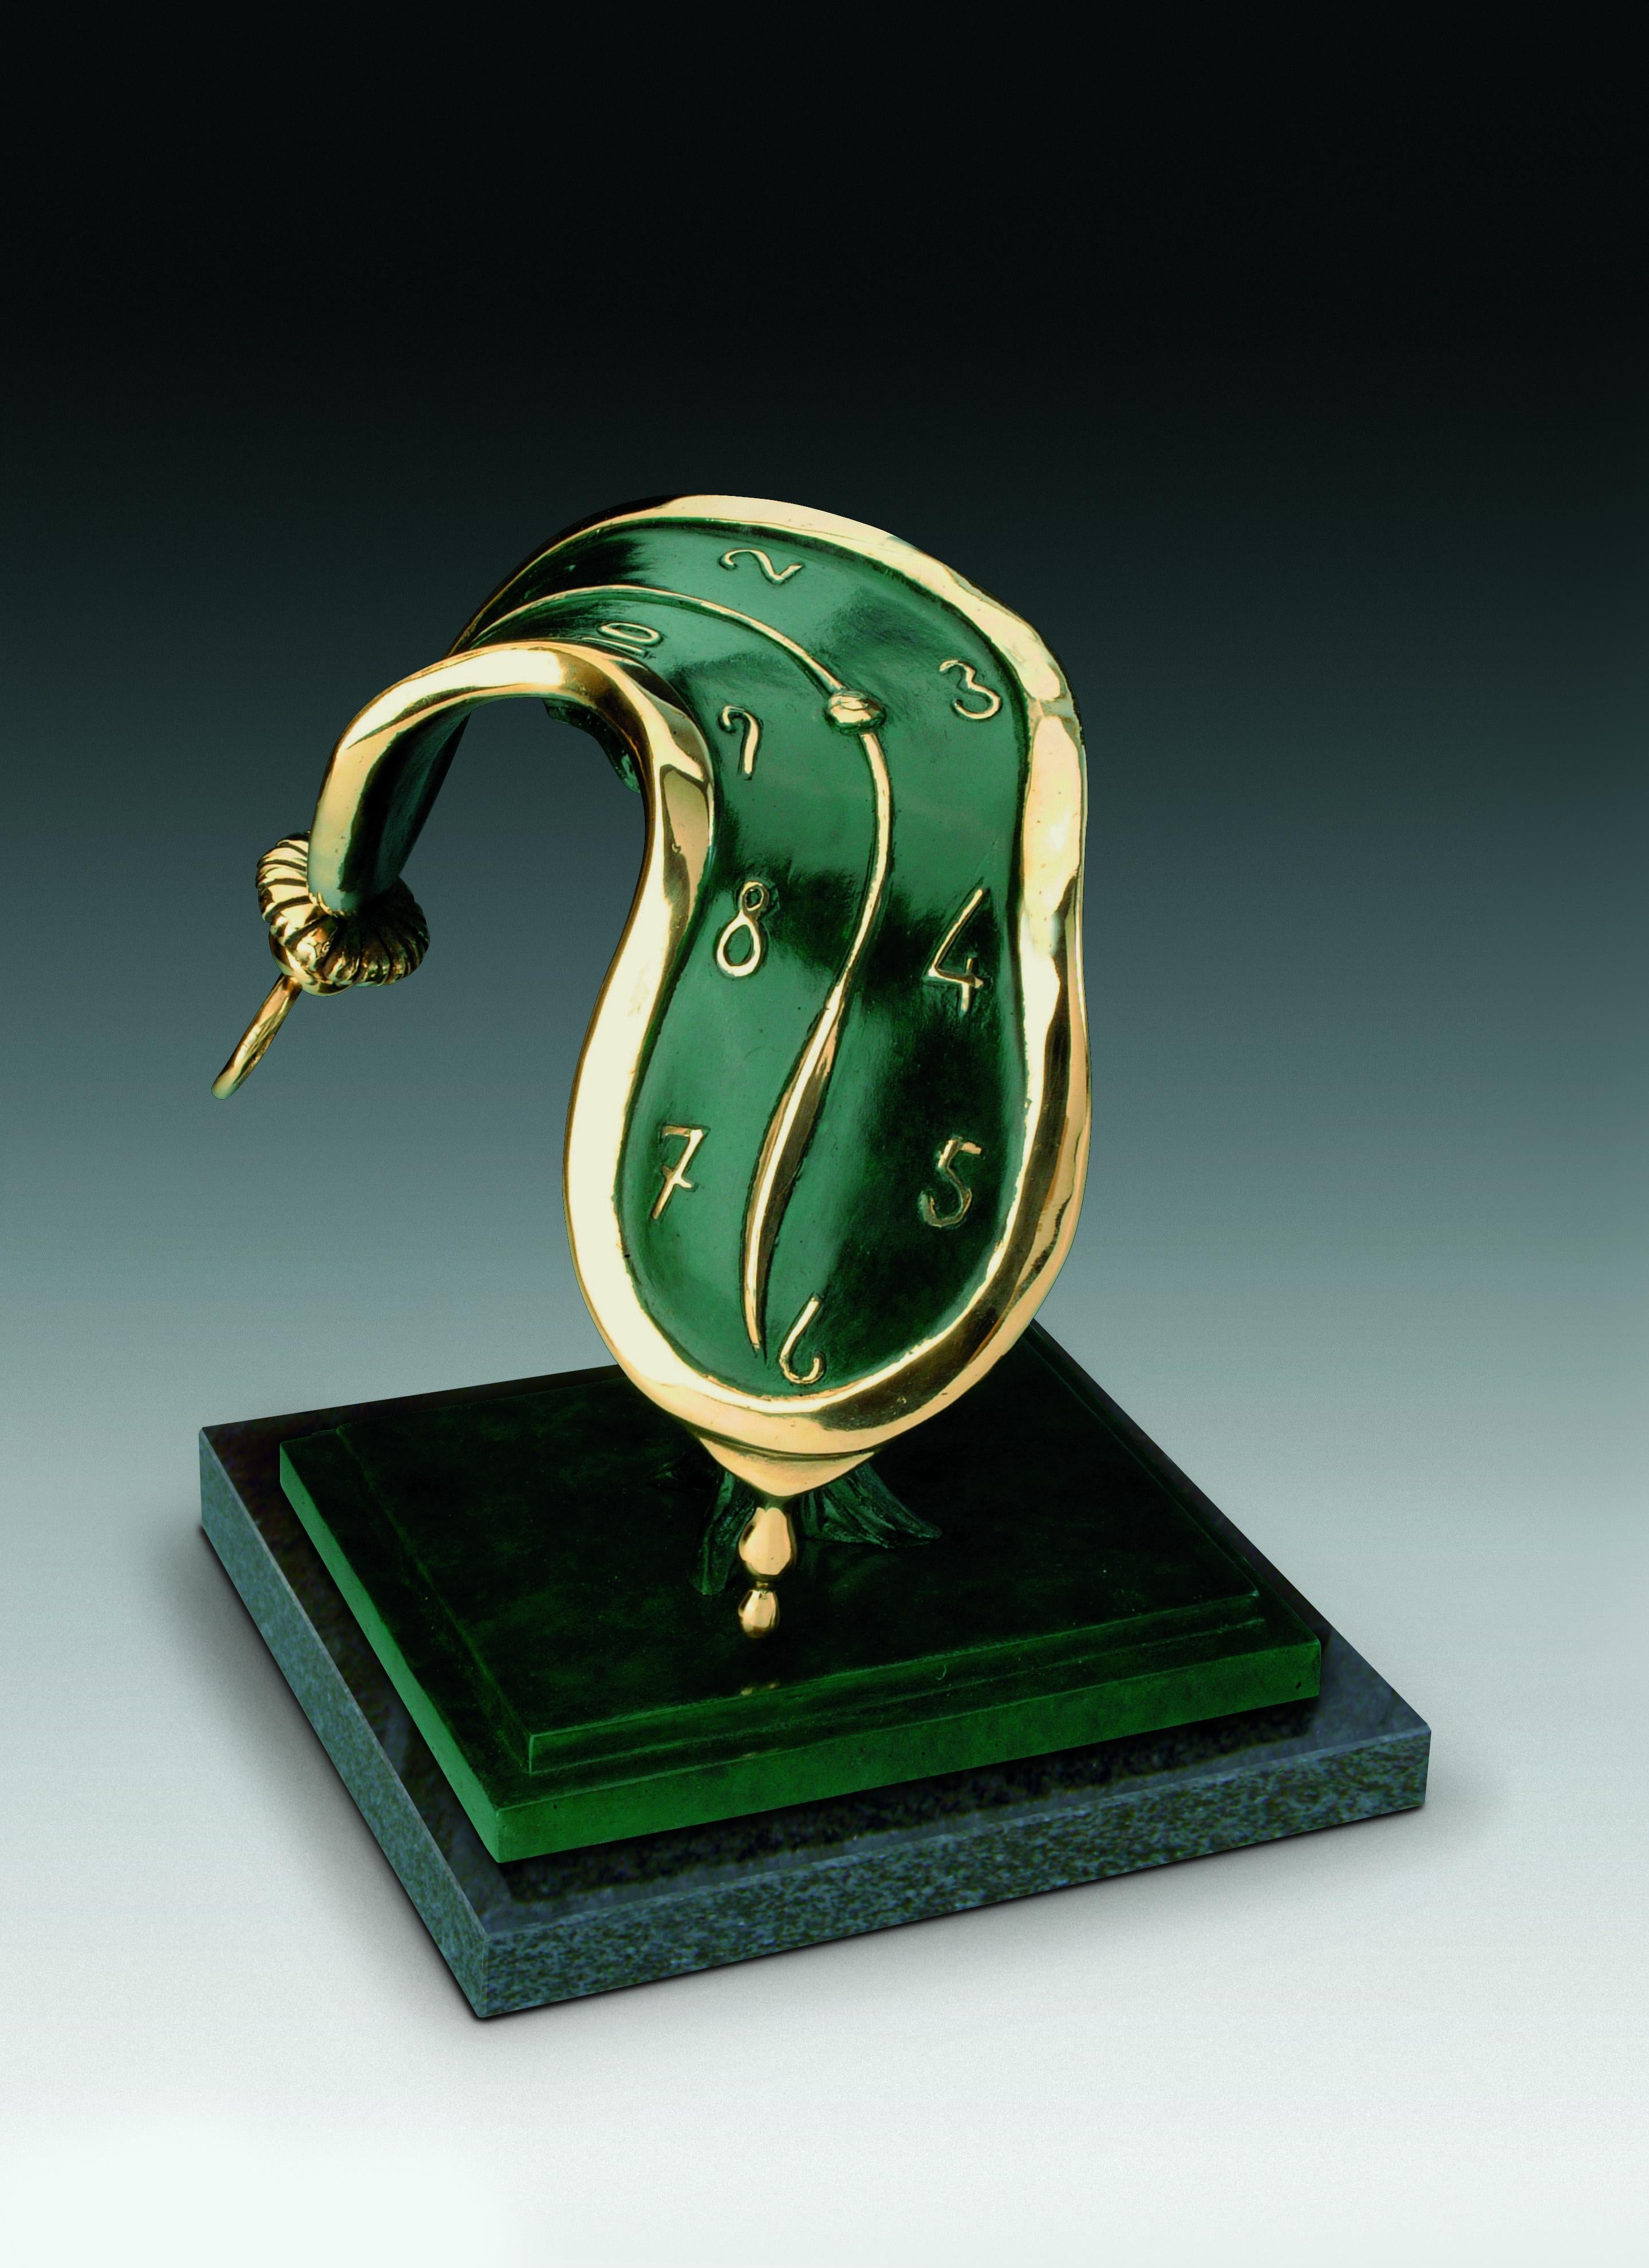 Salvador Dalí Figurative Sculpture - "Dance of Time II" limited edition bronze table sculpture soft pocket watch